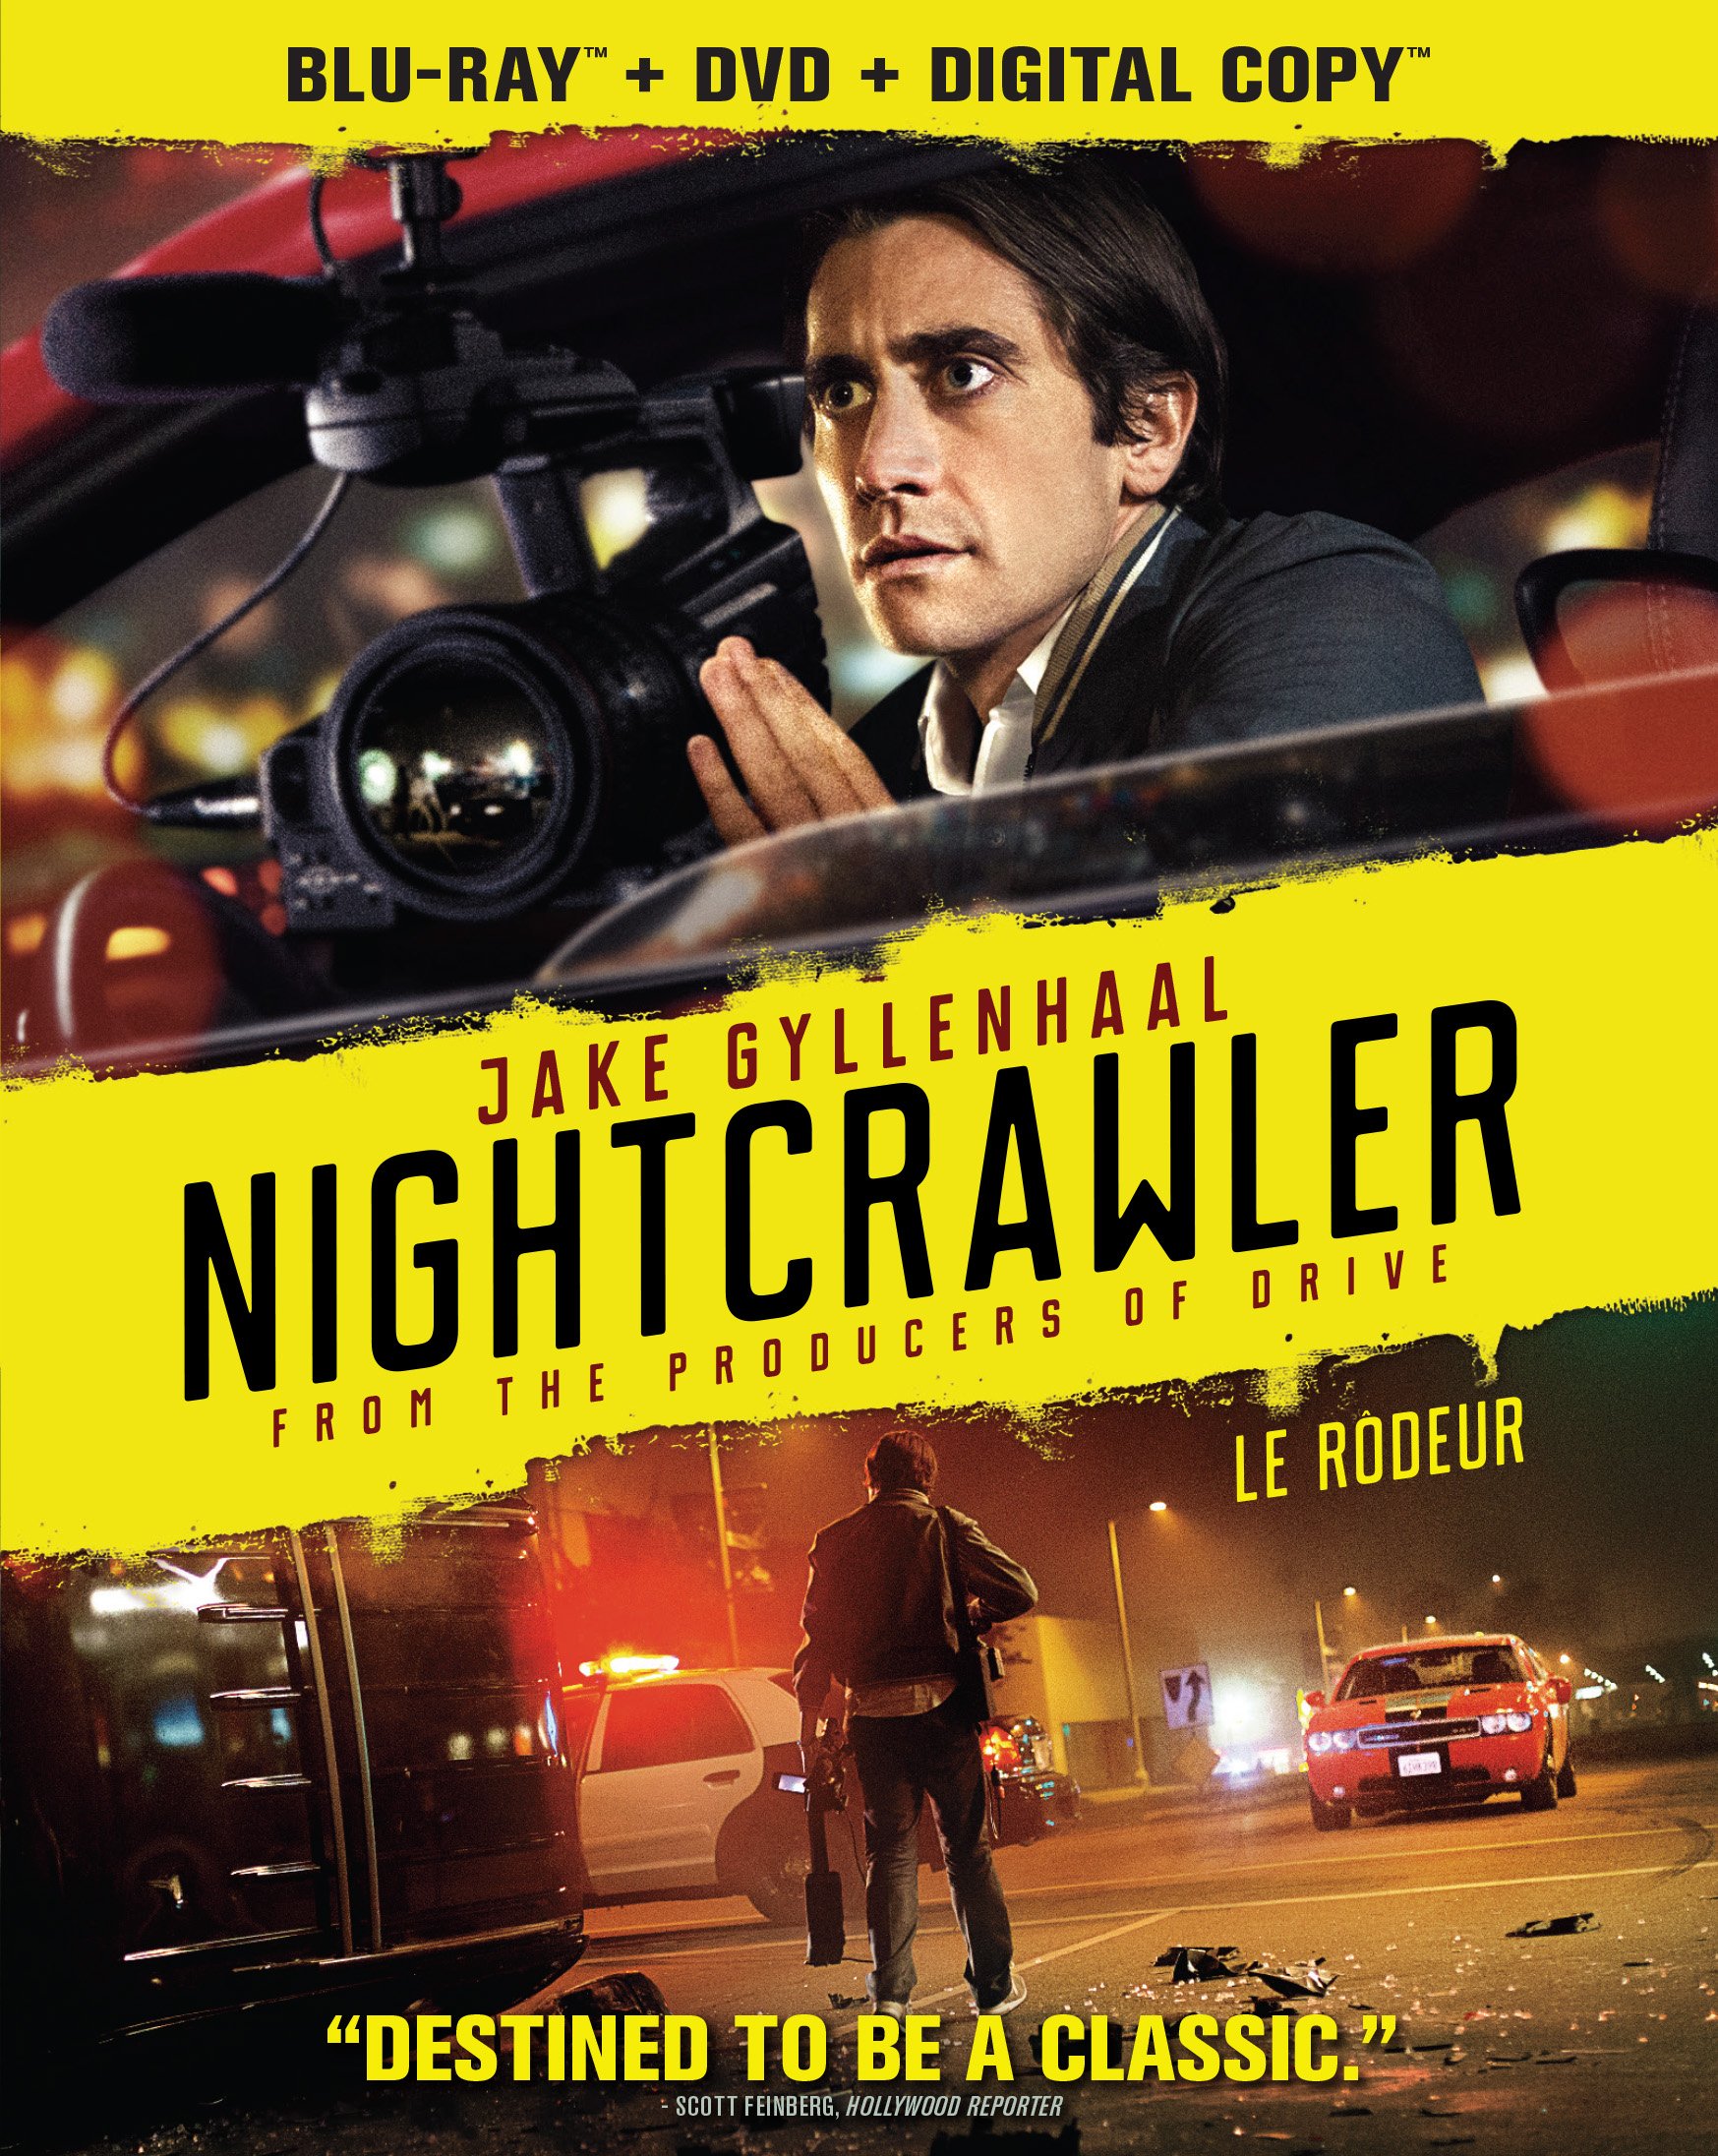 Nightcrawler [Blu-ray + DVD +UltraViolet] (Bilingual) on MovieShack